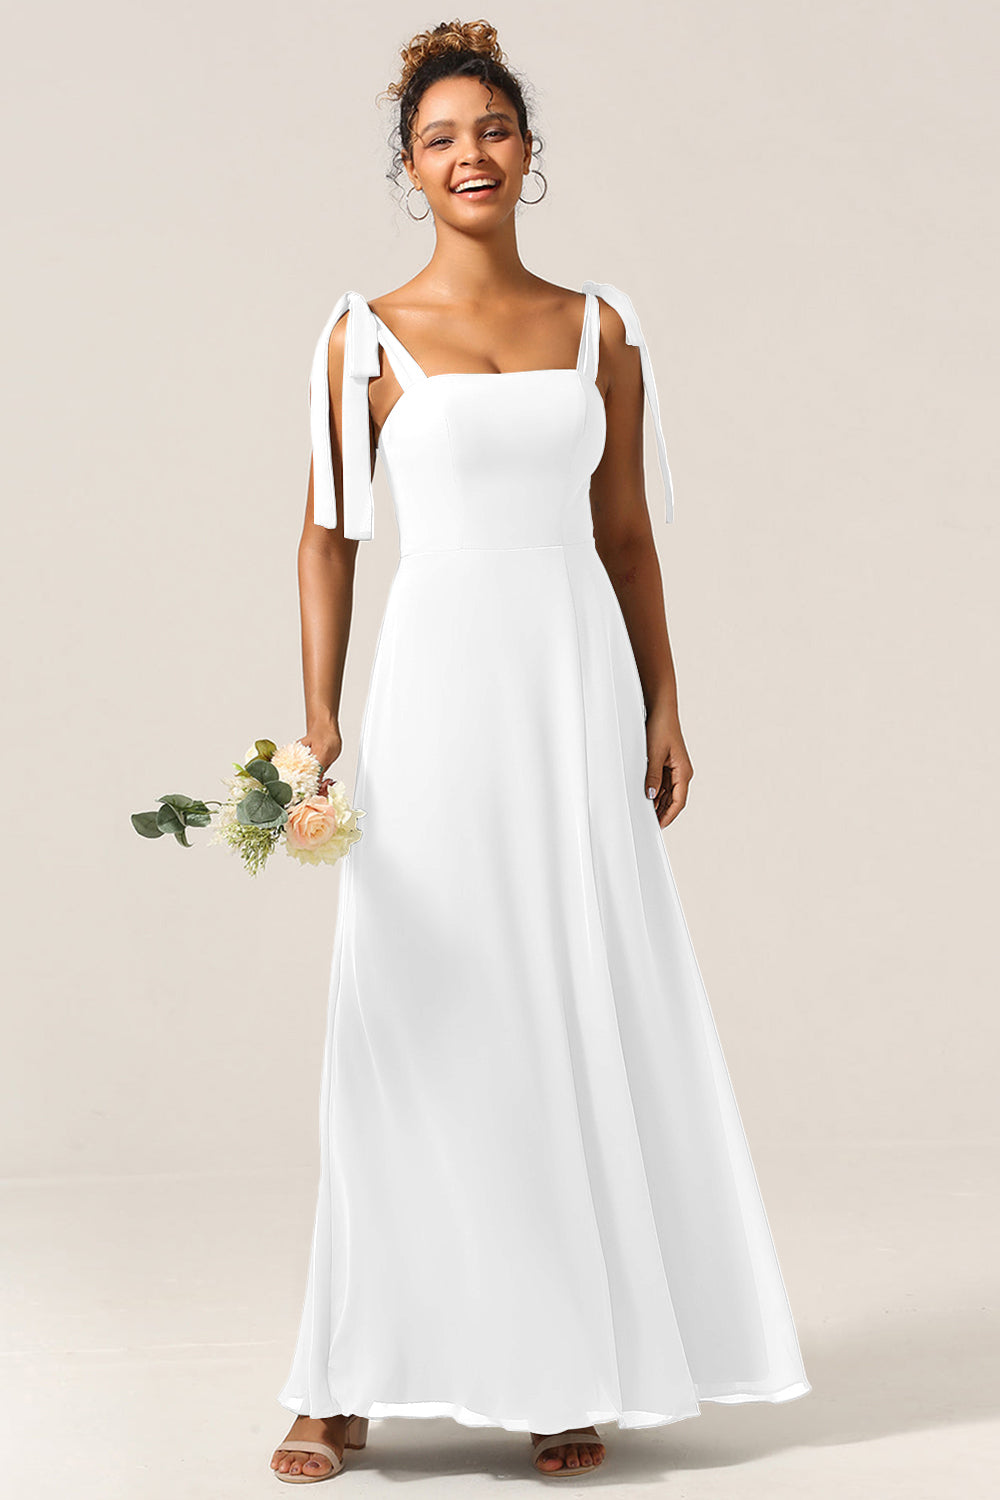 A-Line Spaghetti Straps Floor-Length Chiffon Bridesmaid Dress with Slit